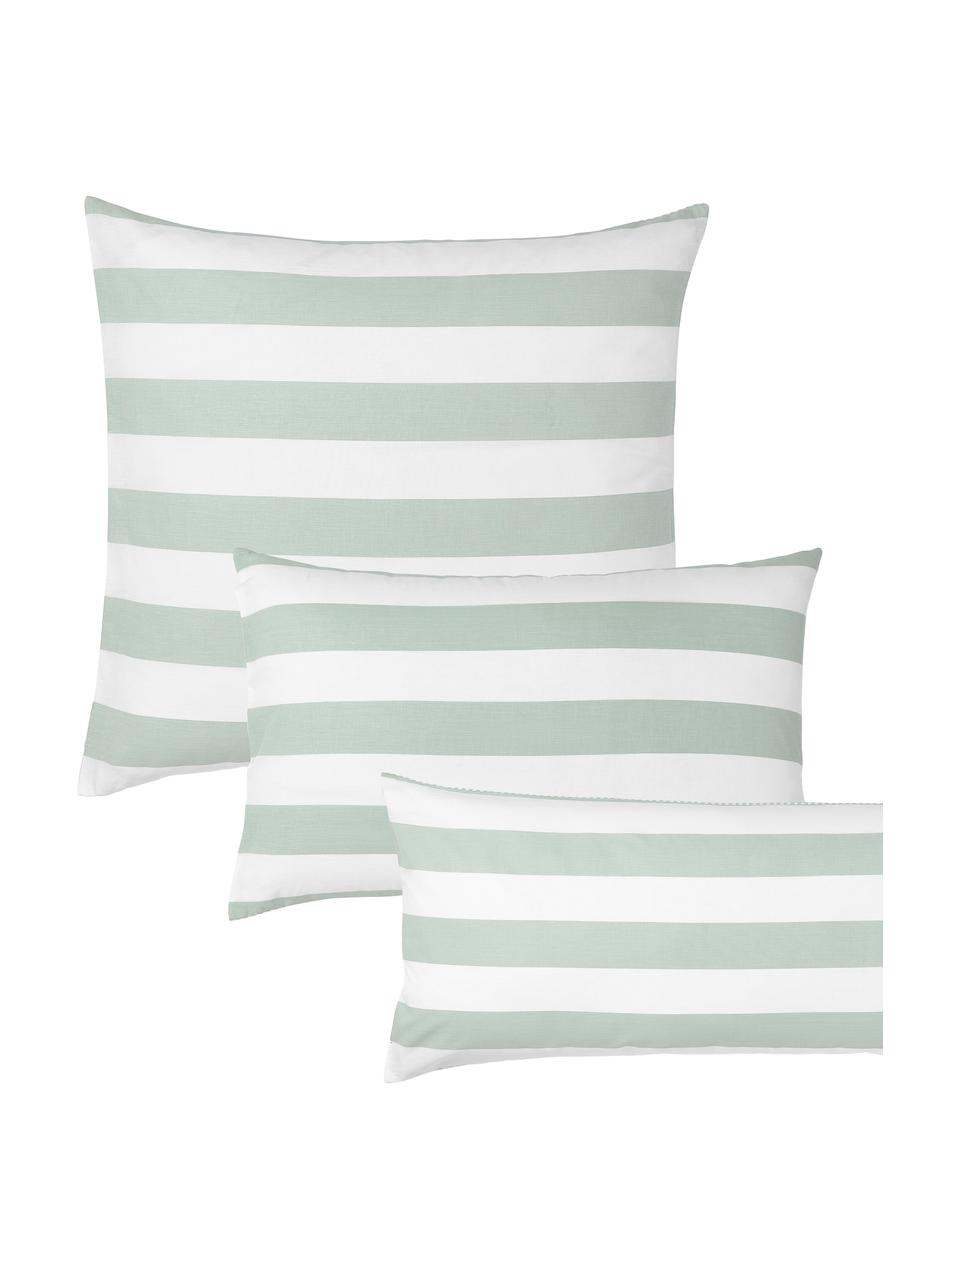 Funda de almohada doble cara de algodón Lorena, Verde salvia/blanco, An 45 x L 110 cm